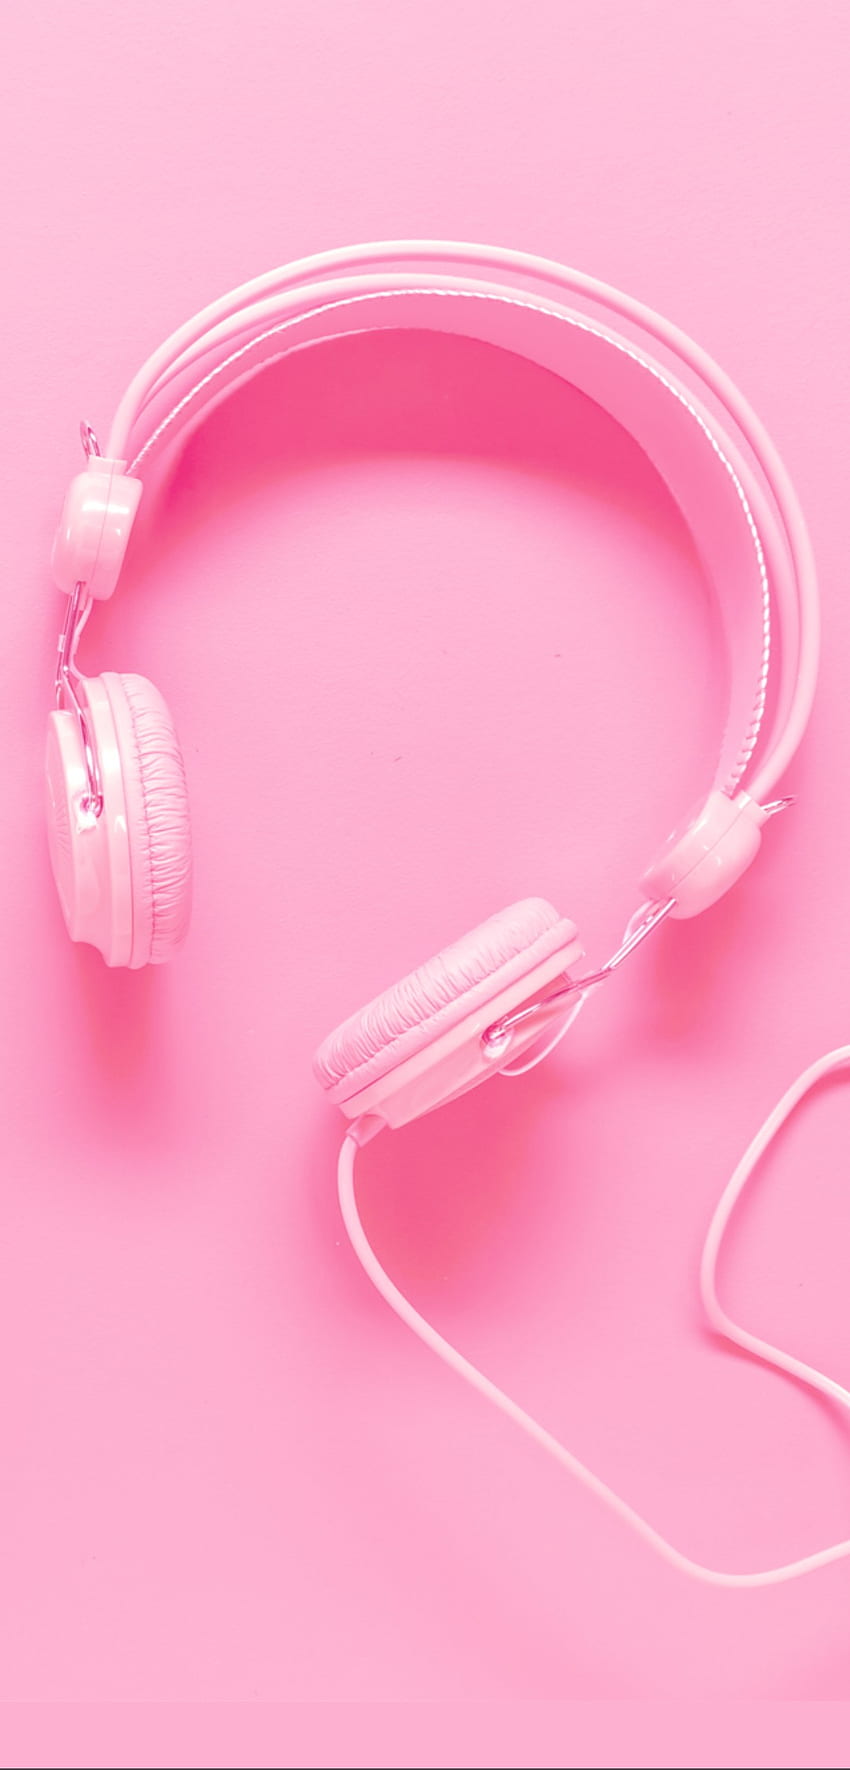 Classic Wired Headphones Gradient Blue Pink Stock Photo 1497249296   Shutterstock